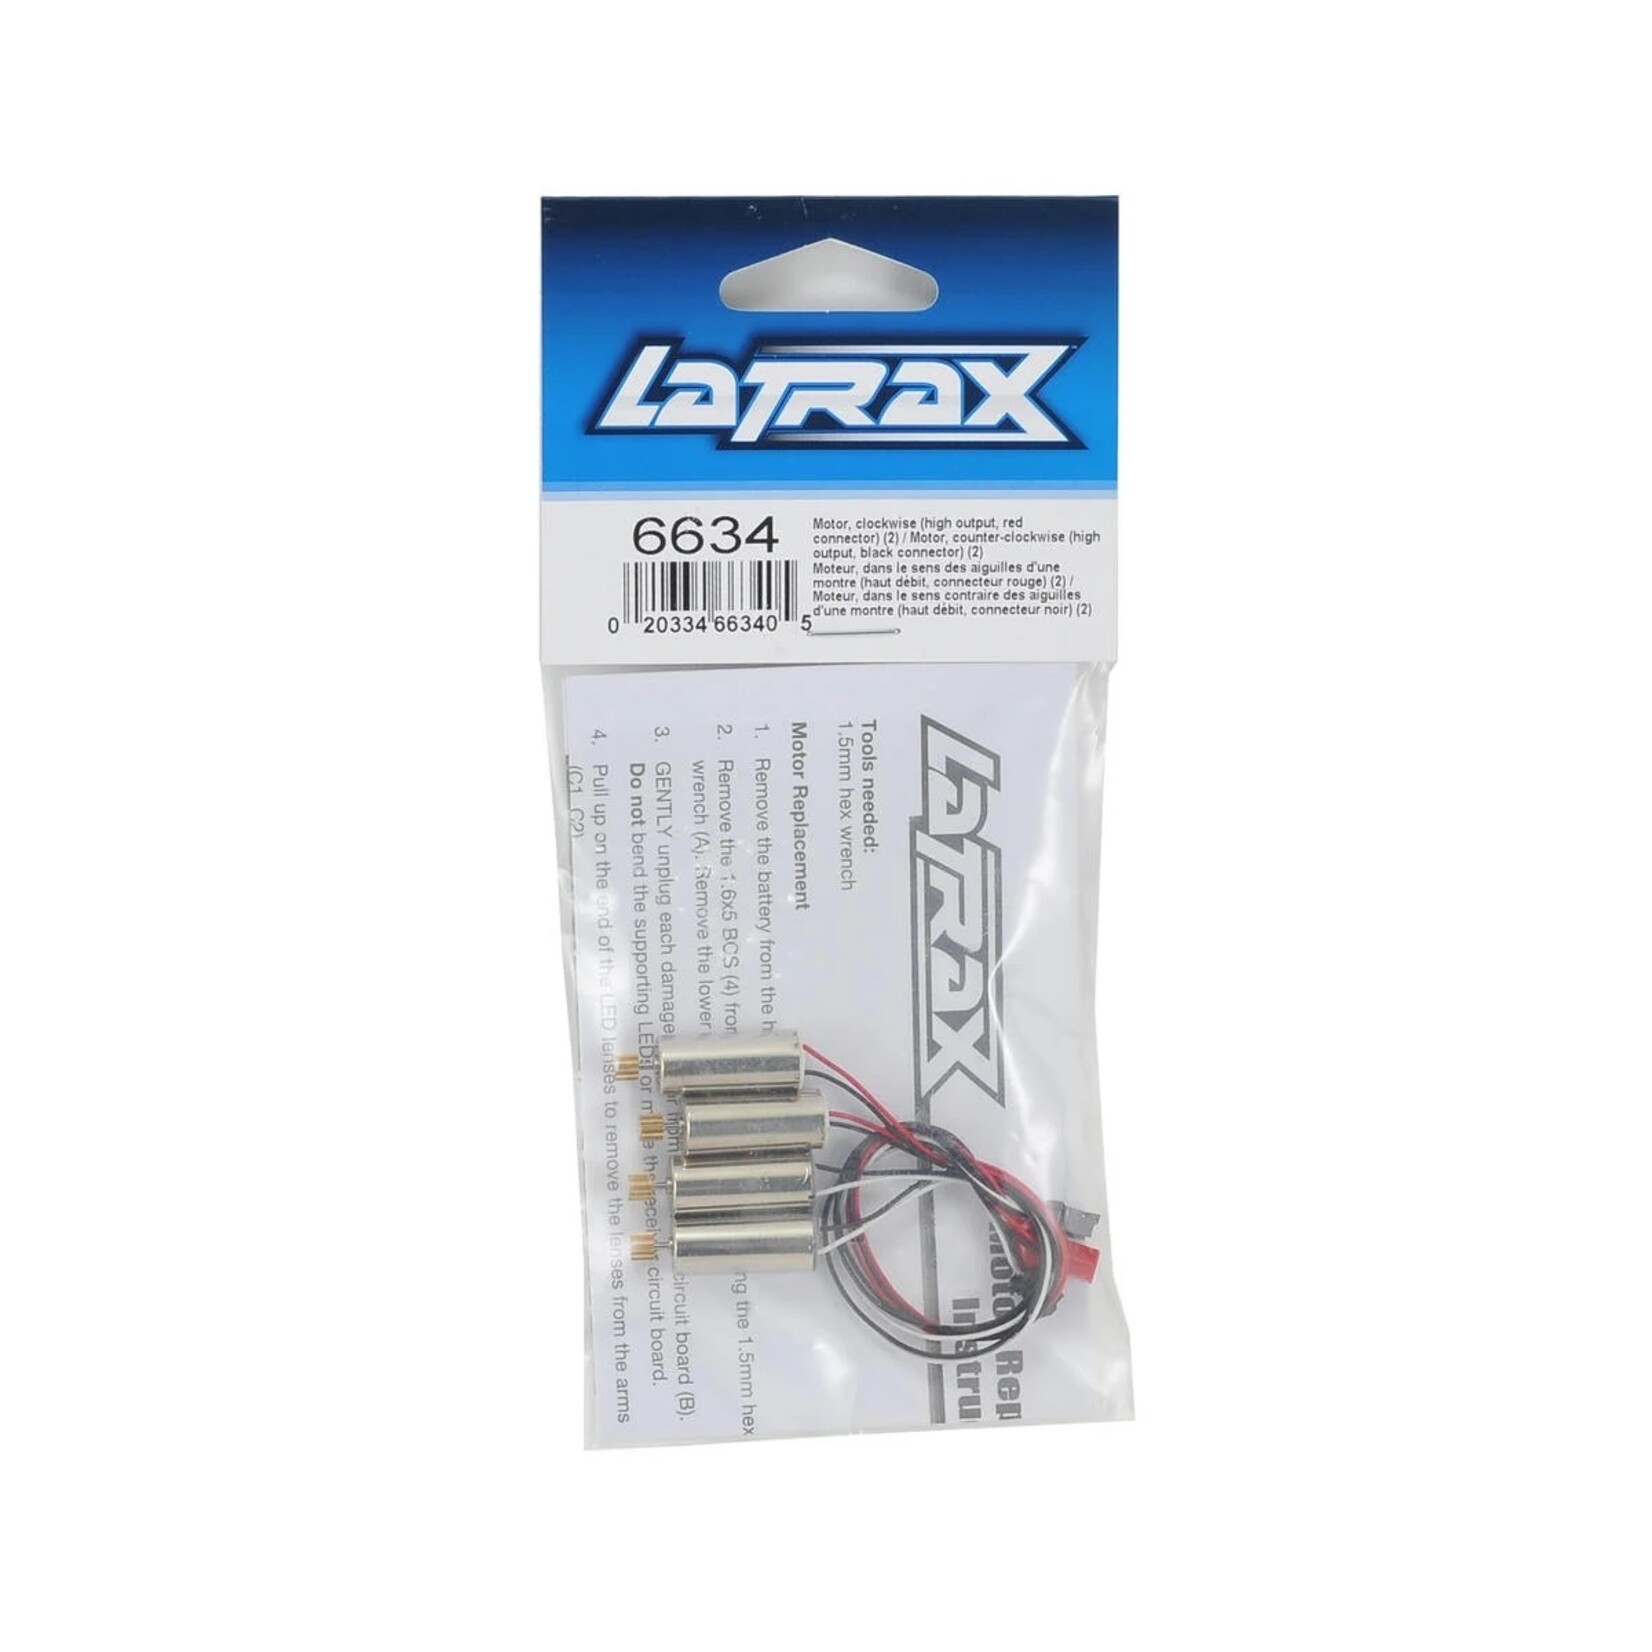 LaTrax Traxxas LaTrax Alias Motor Set #6634